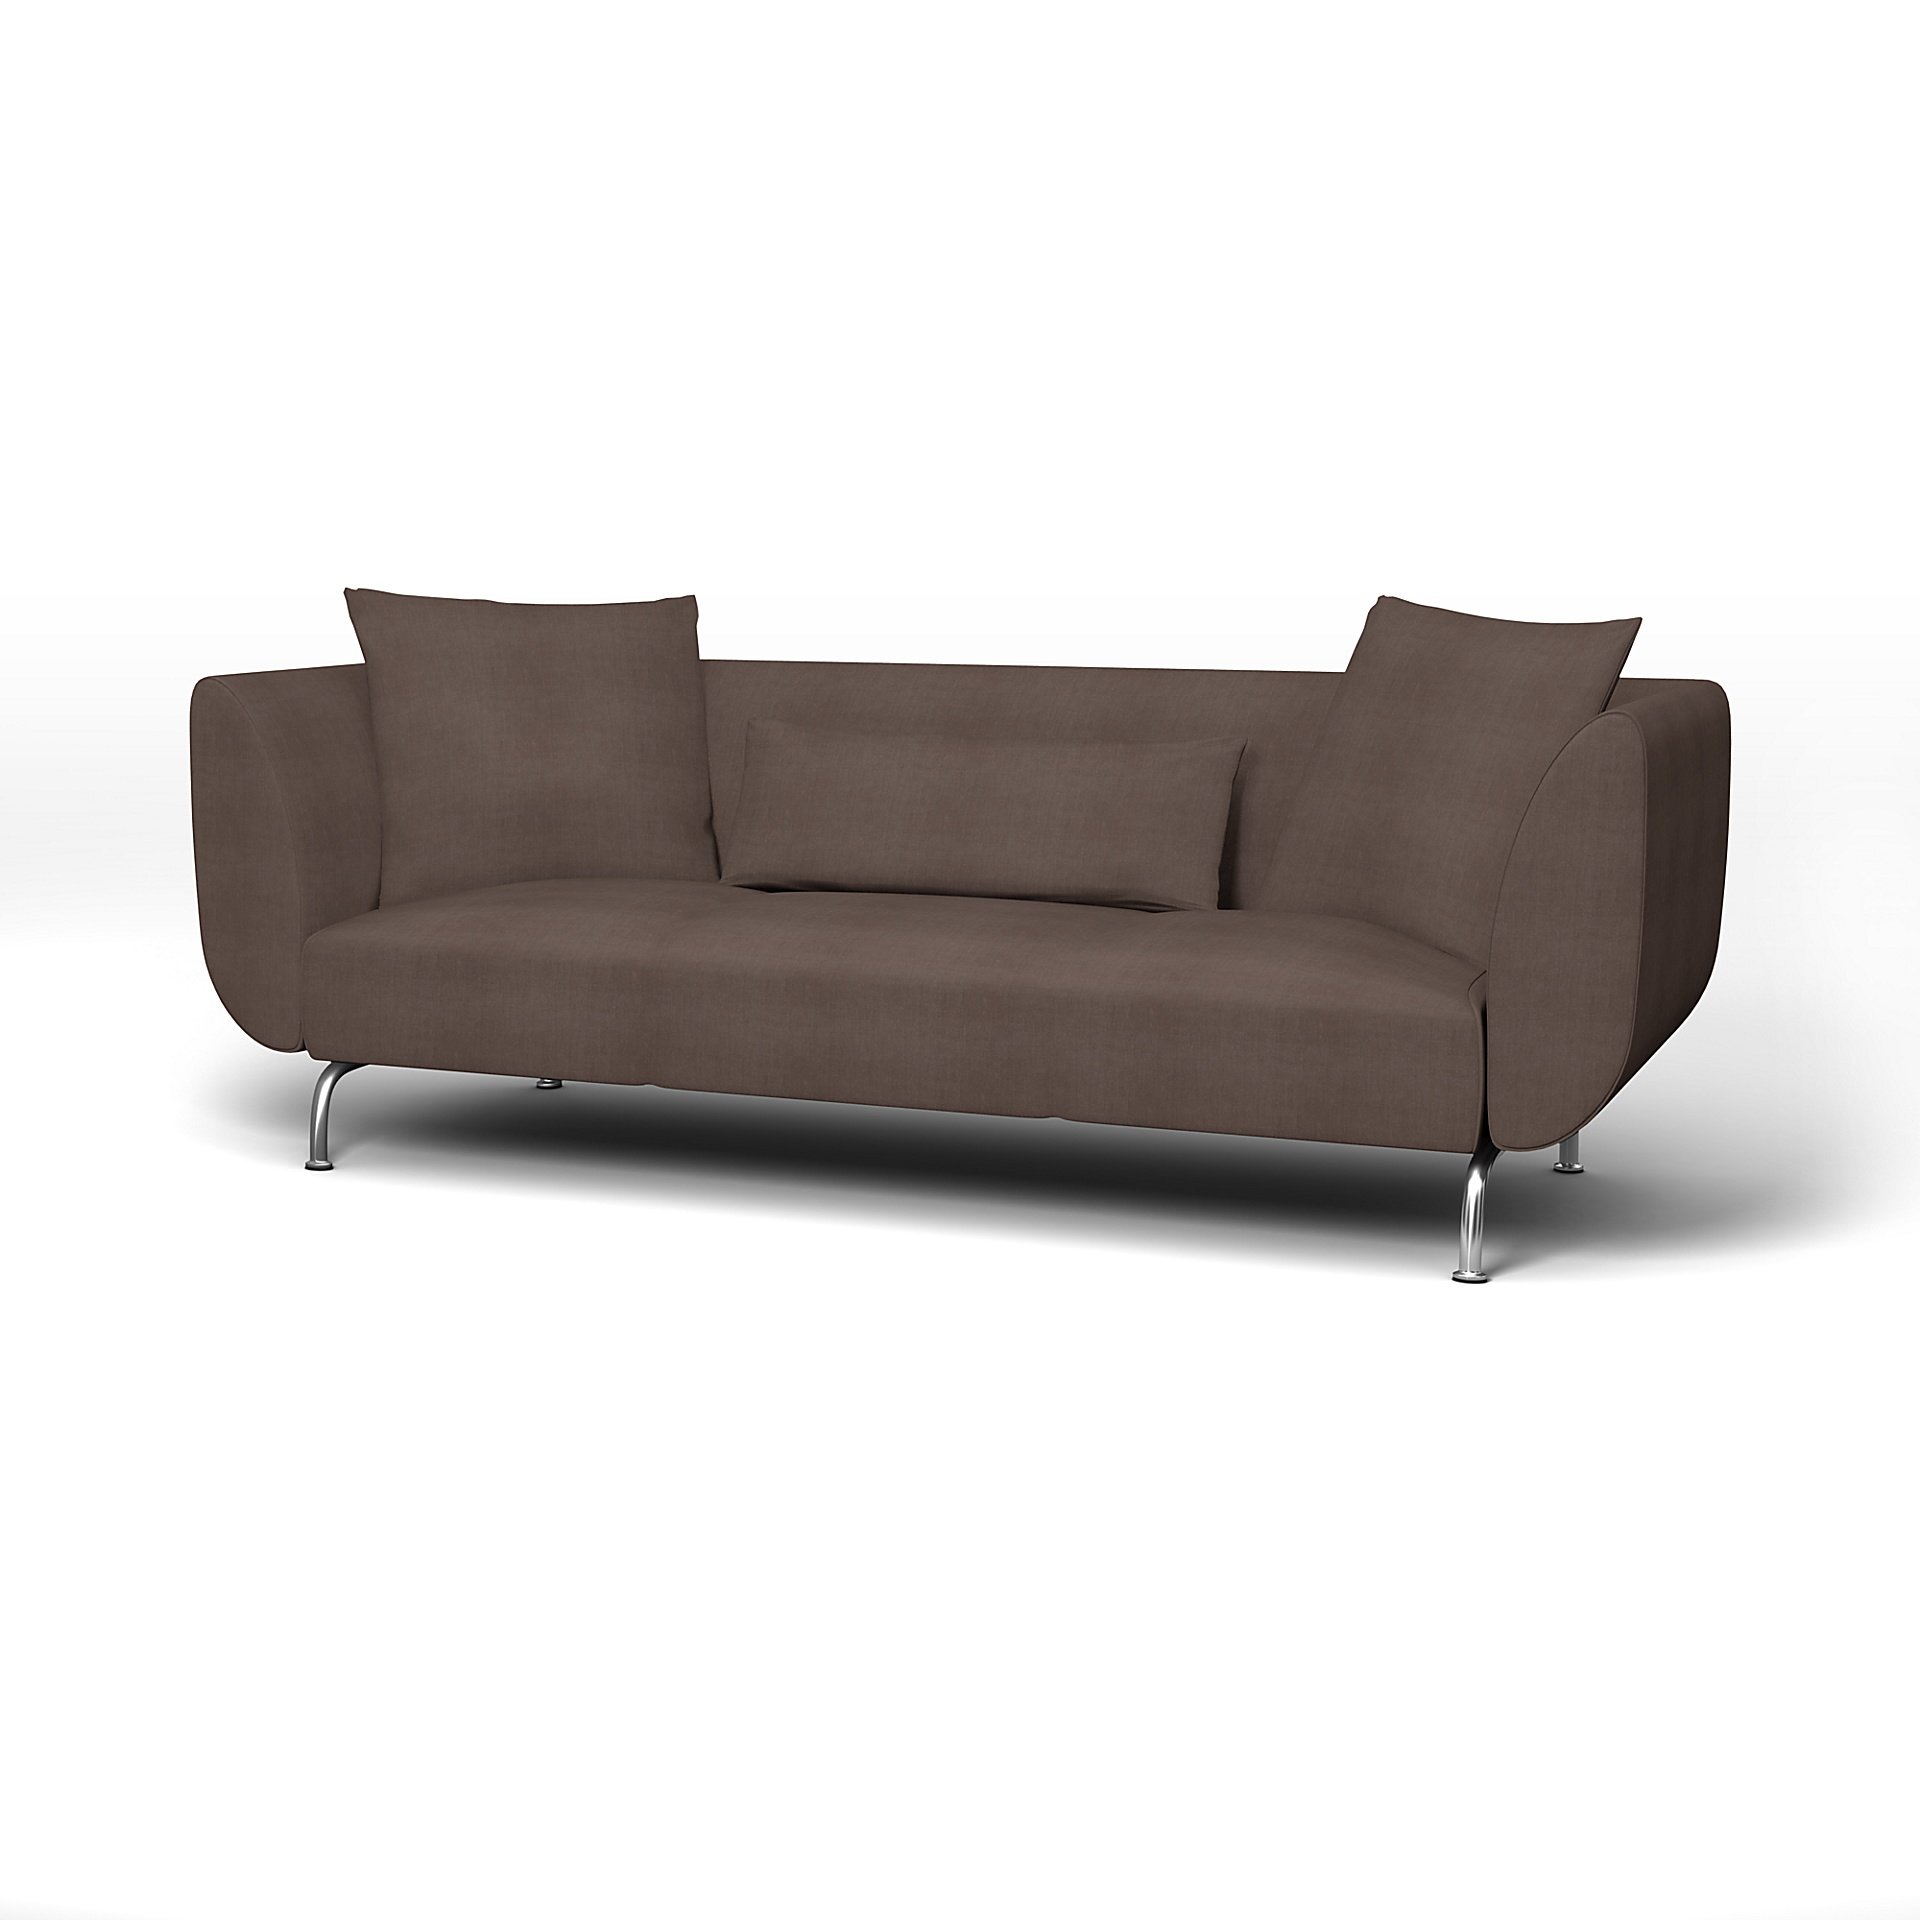 IKEA - Stromstad 3 Seater Sofa Cover, Cocoa, Linen - Bemz